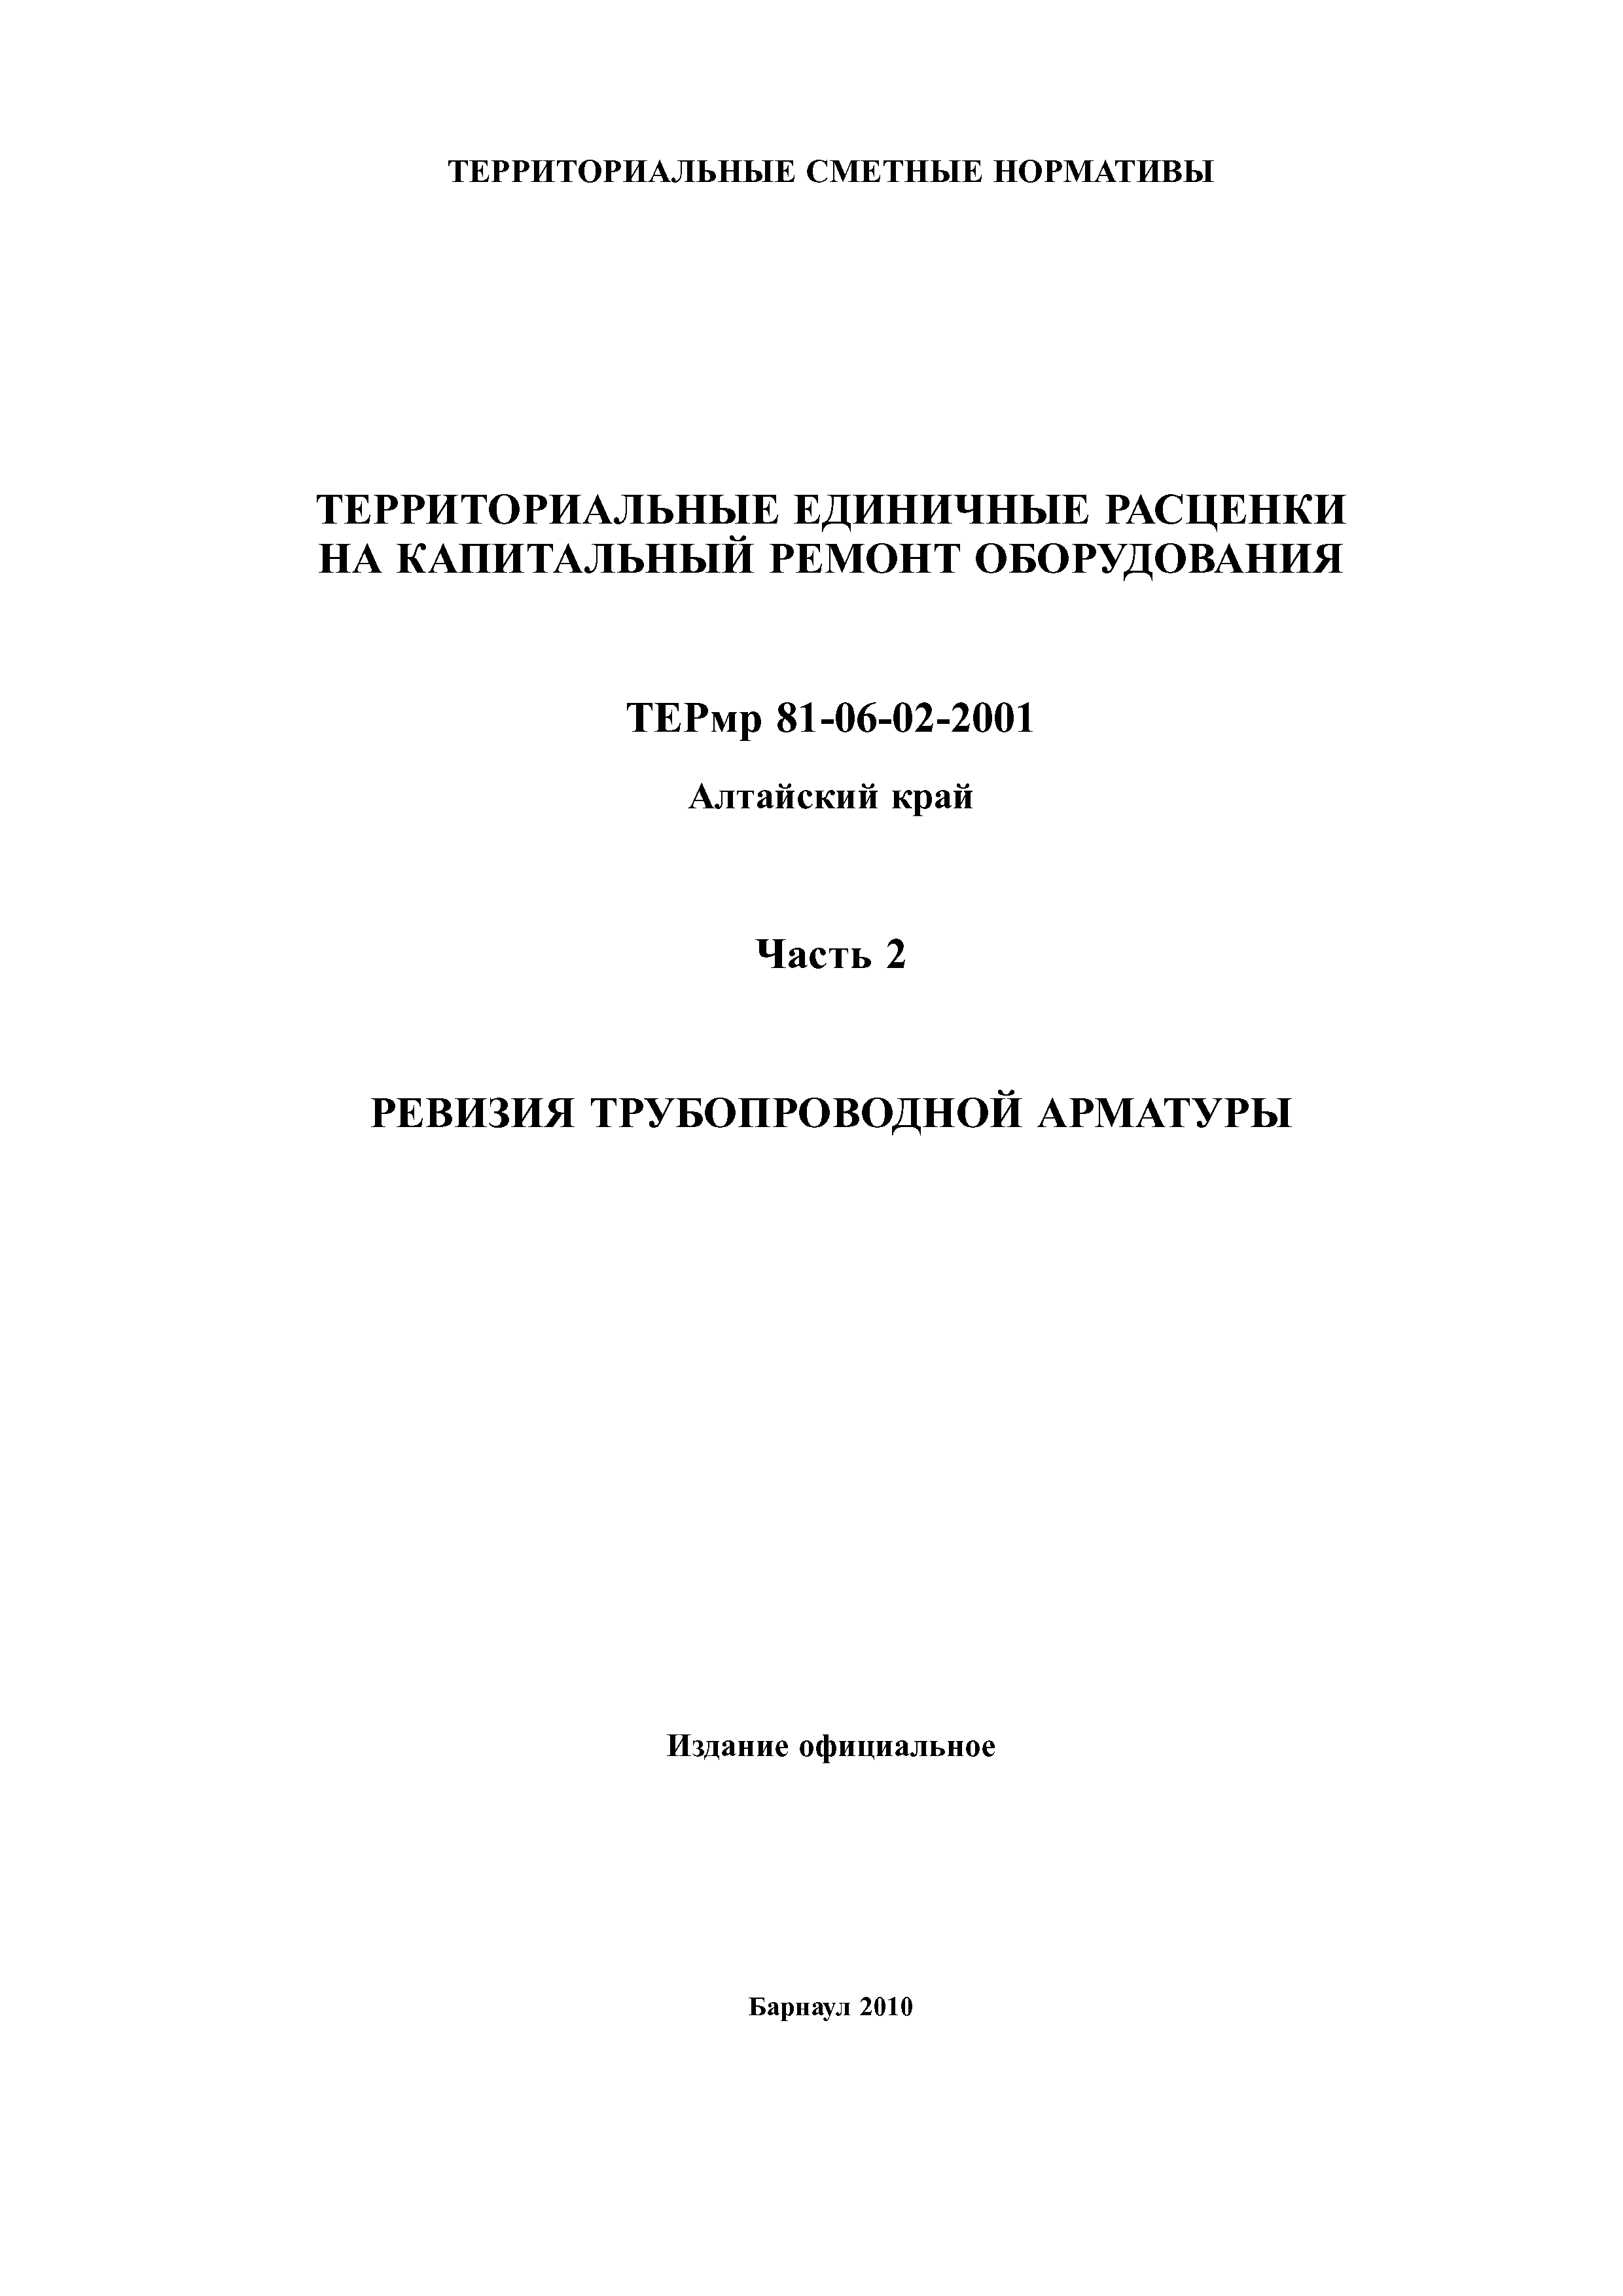 ТЕРмр Алтайский край 81-06-02-2001